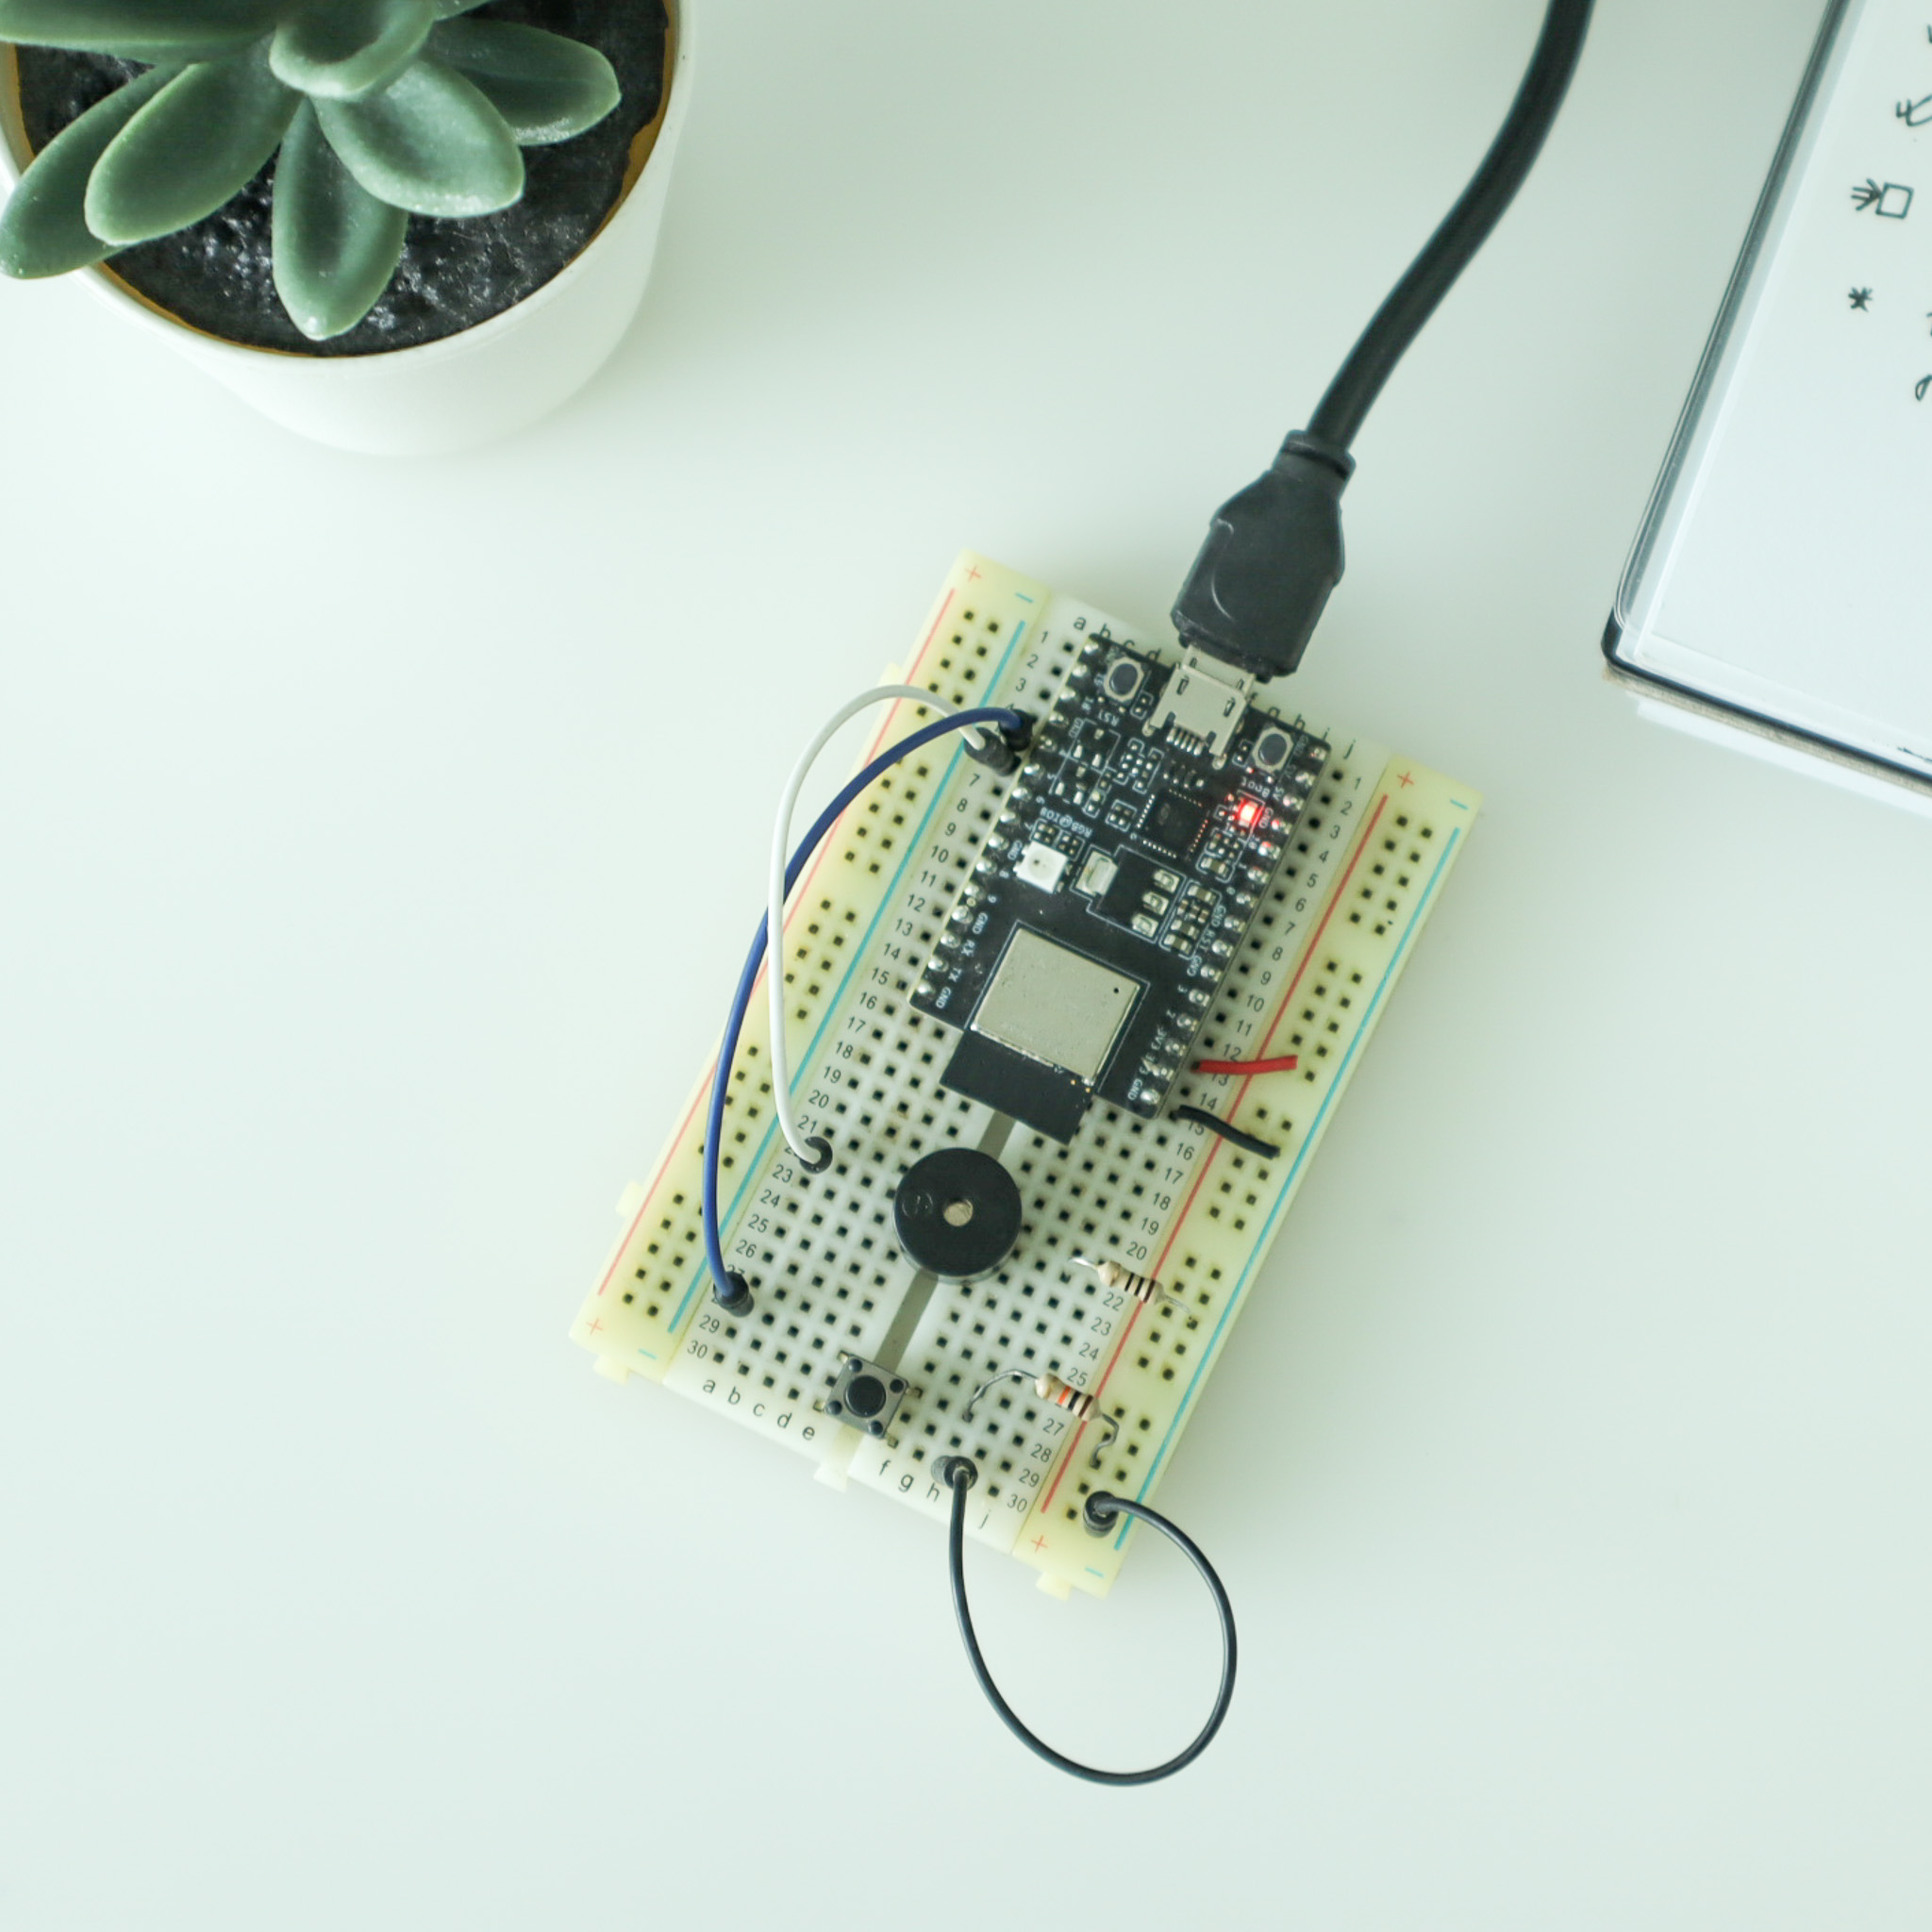 Press the buzzer with Arduino on ESP32-C3 prototype